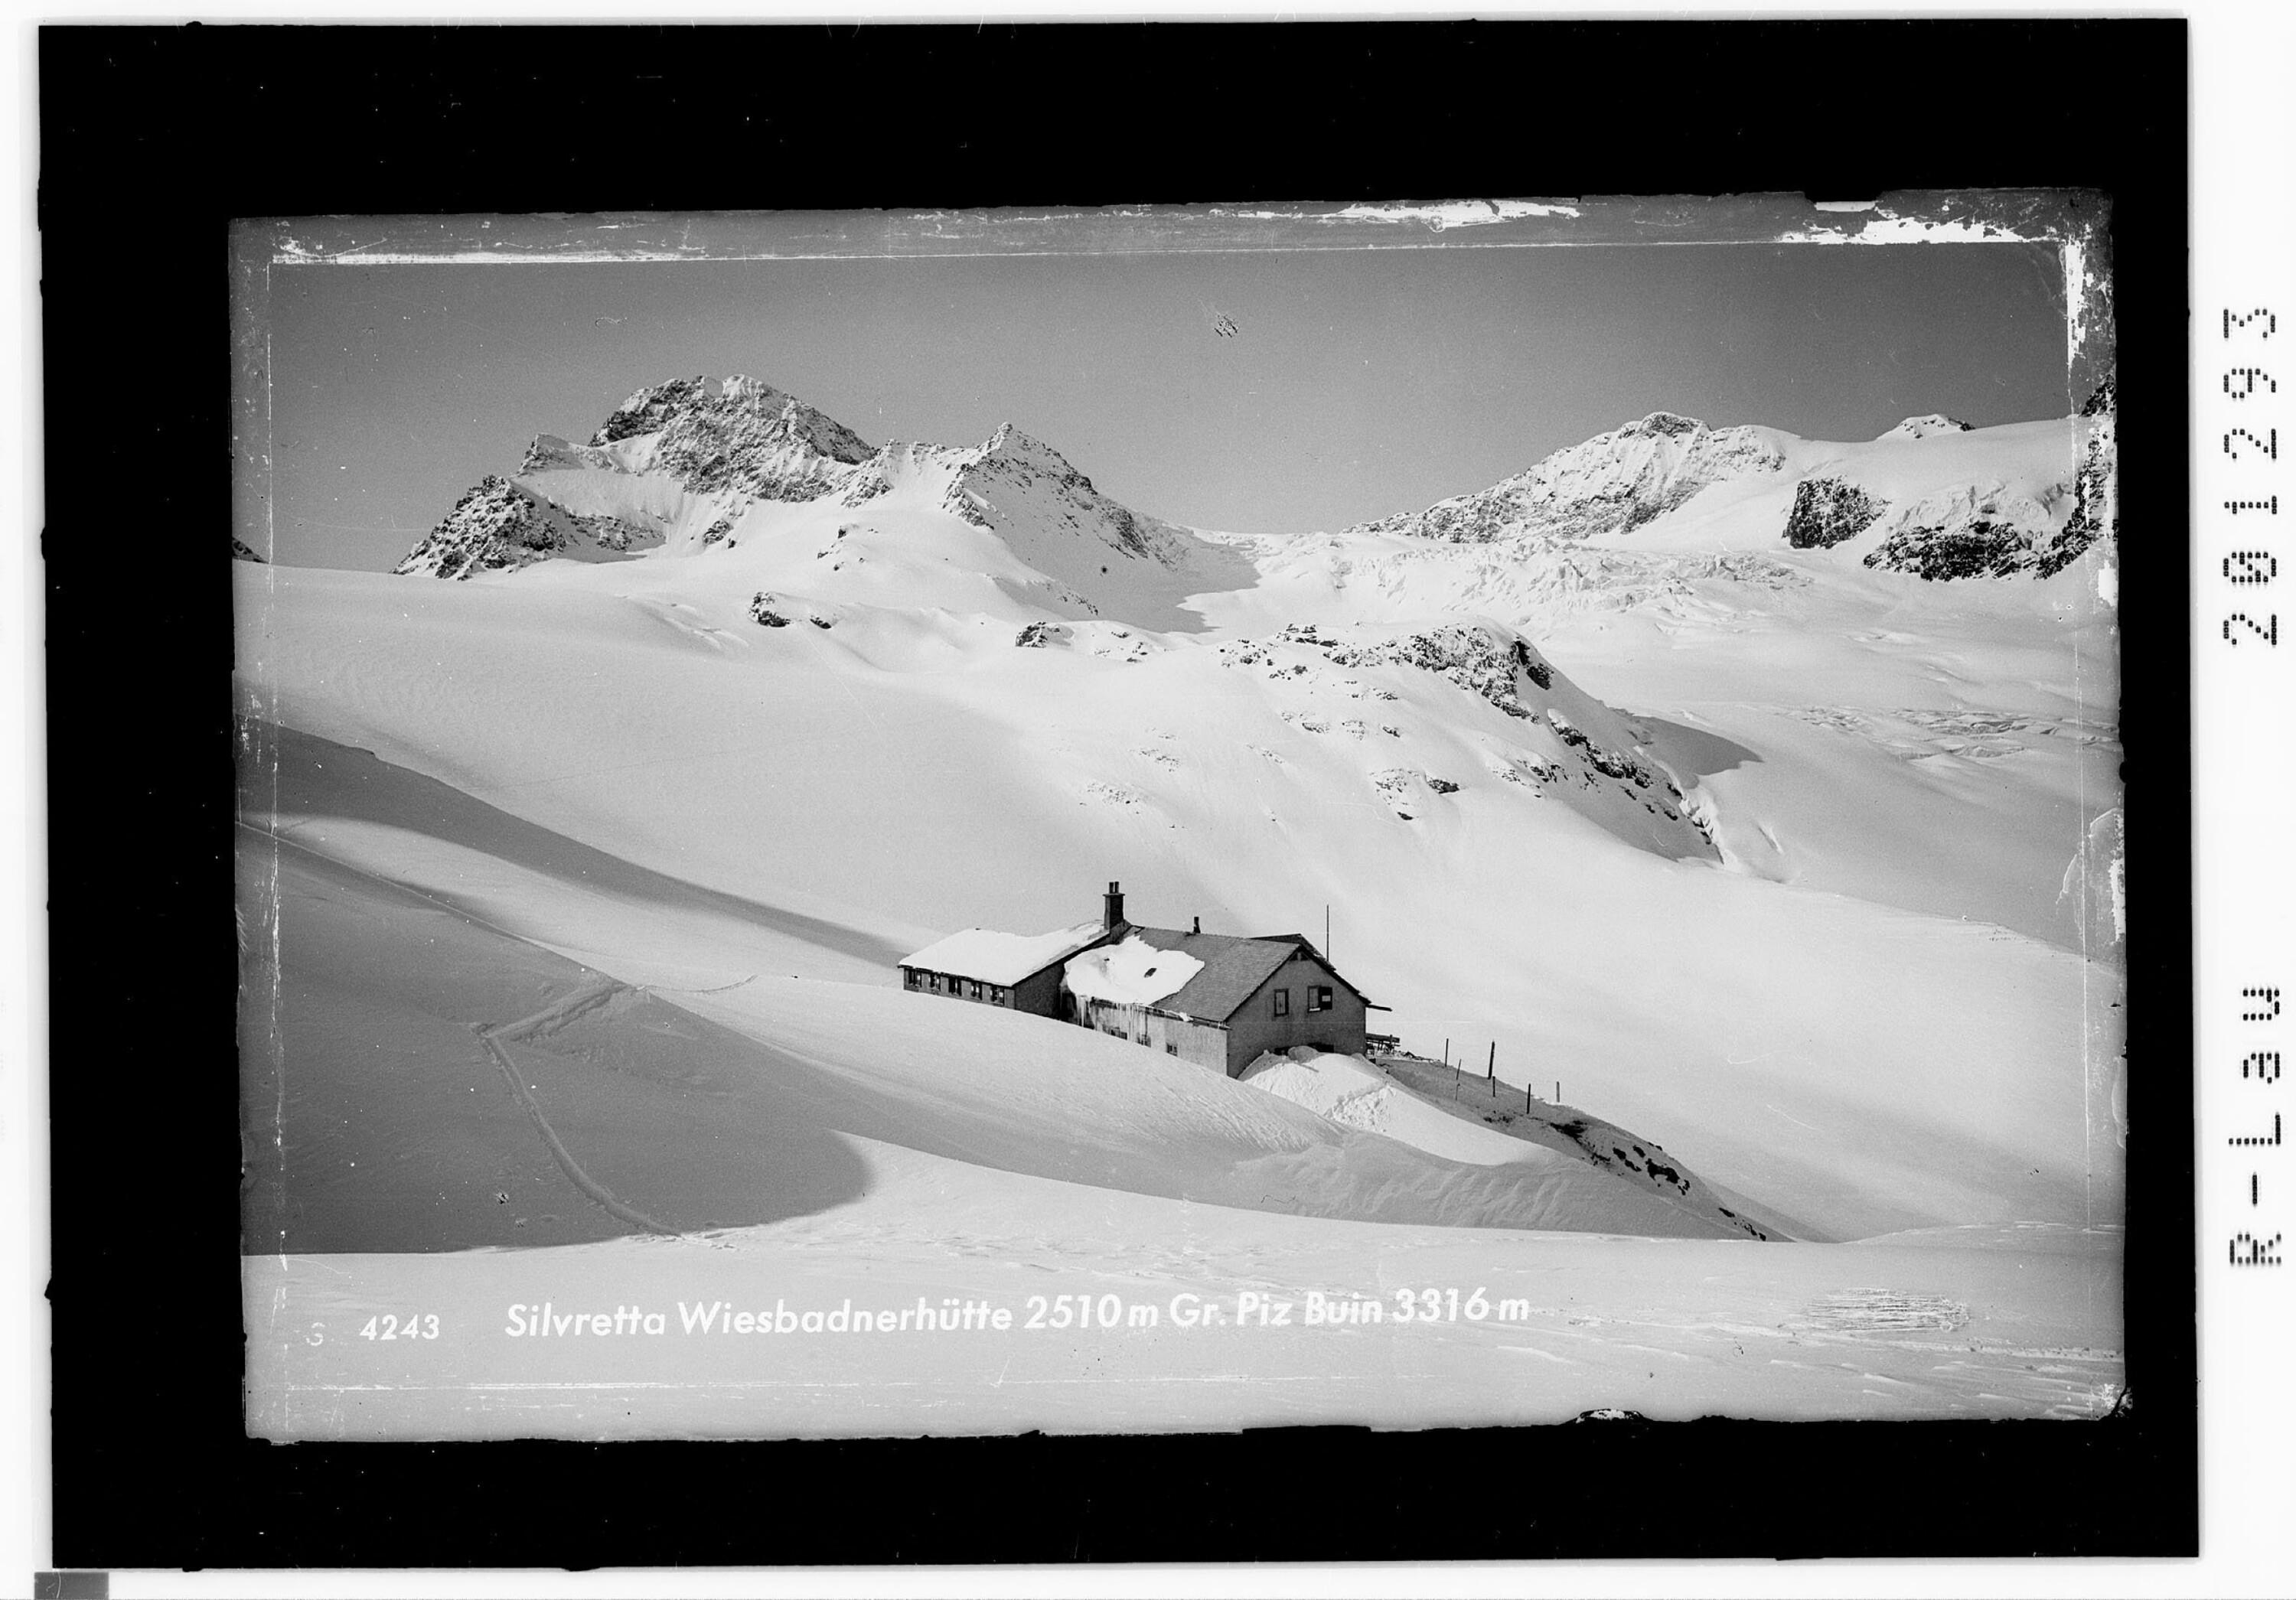 Silvretta Wiesbadnerhütte 2510 m mit Gr. Piz Buin 3316 m></div>


    <hr>
    <div class=